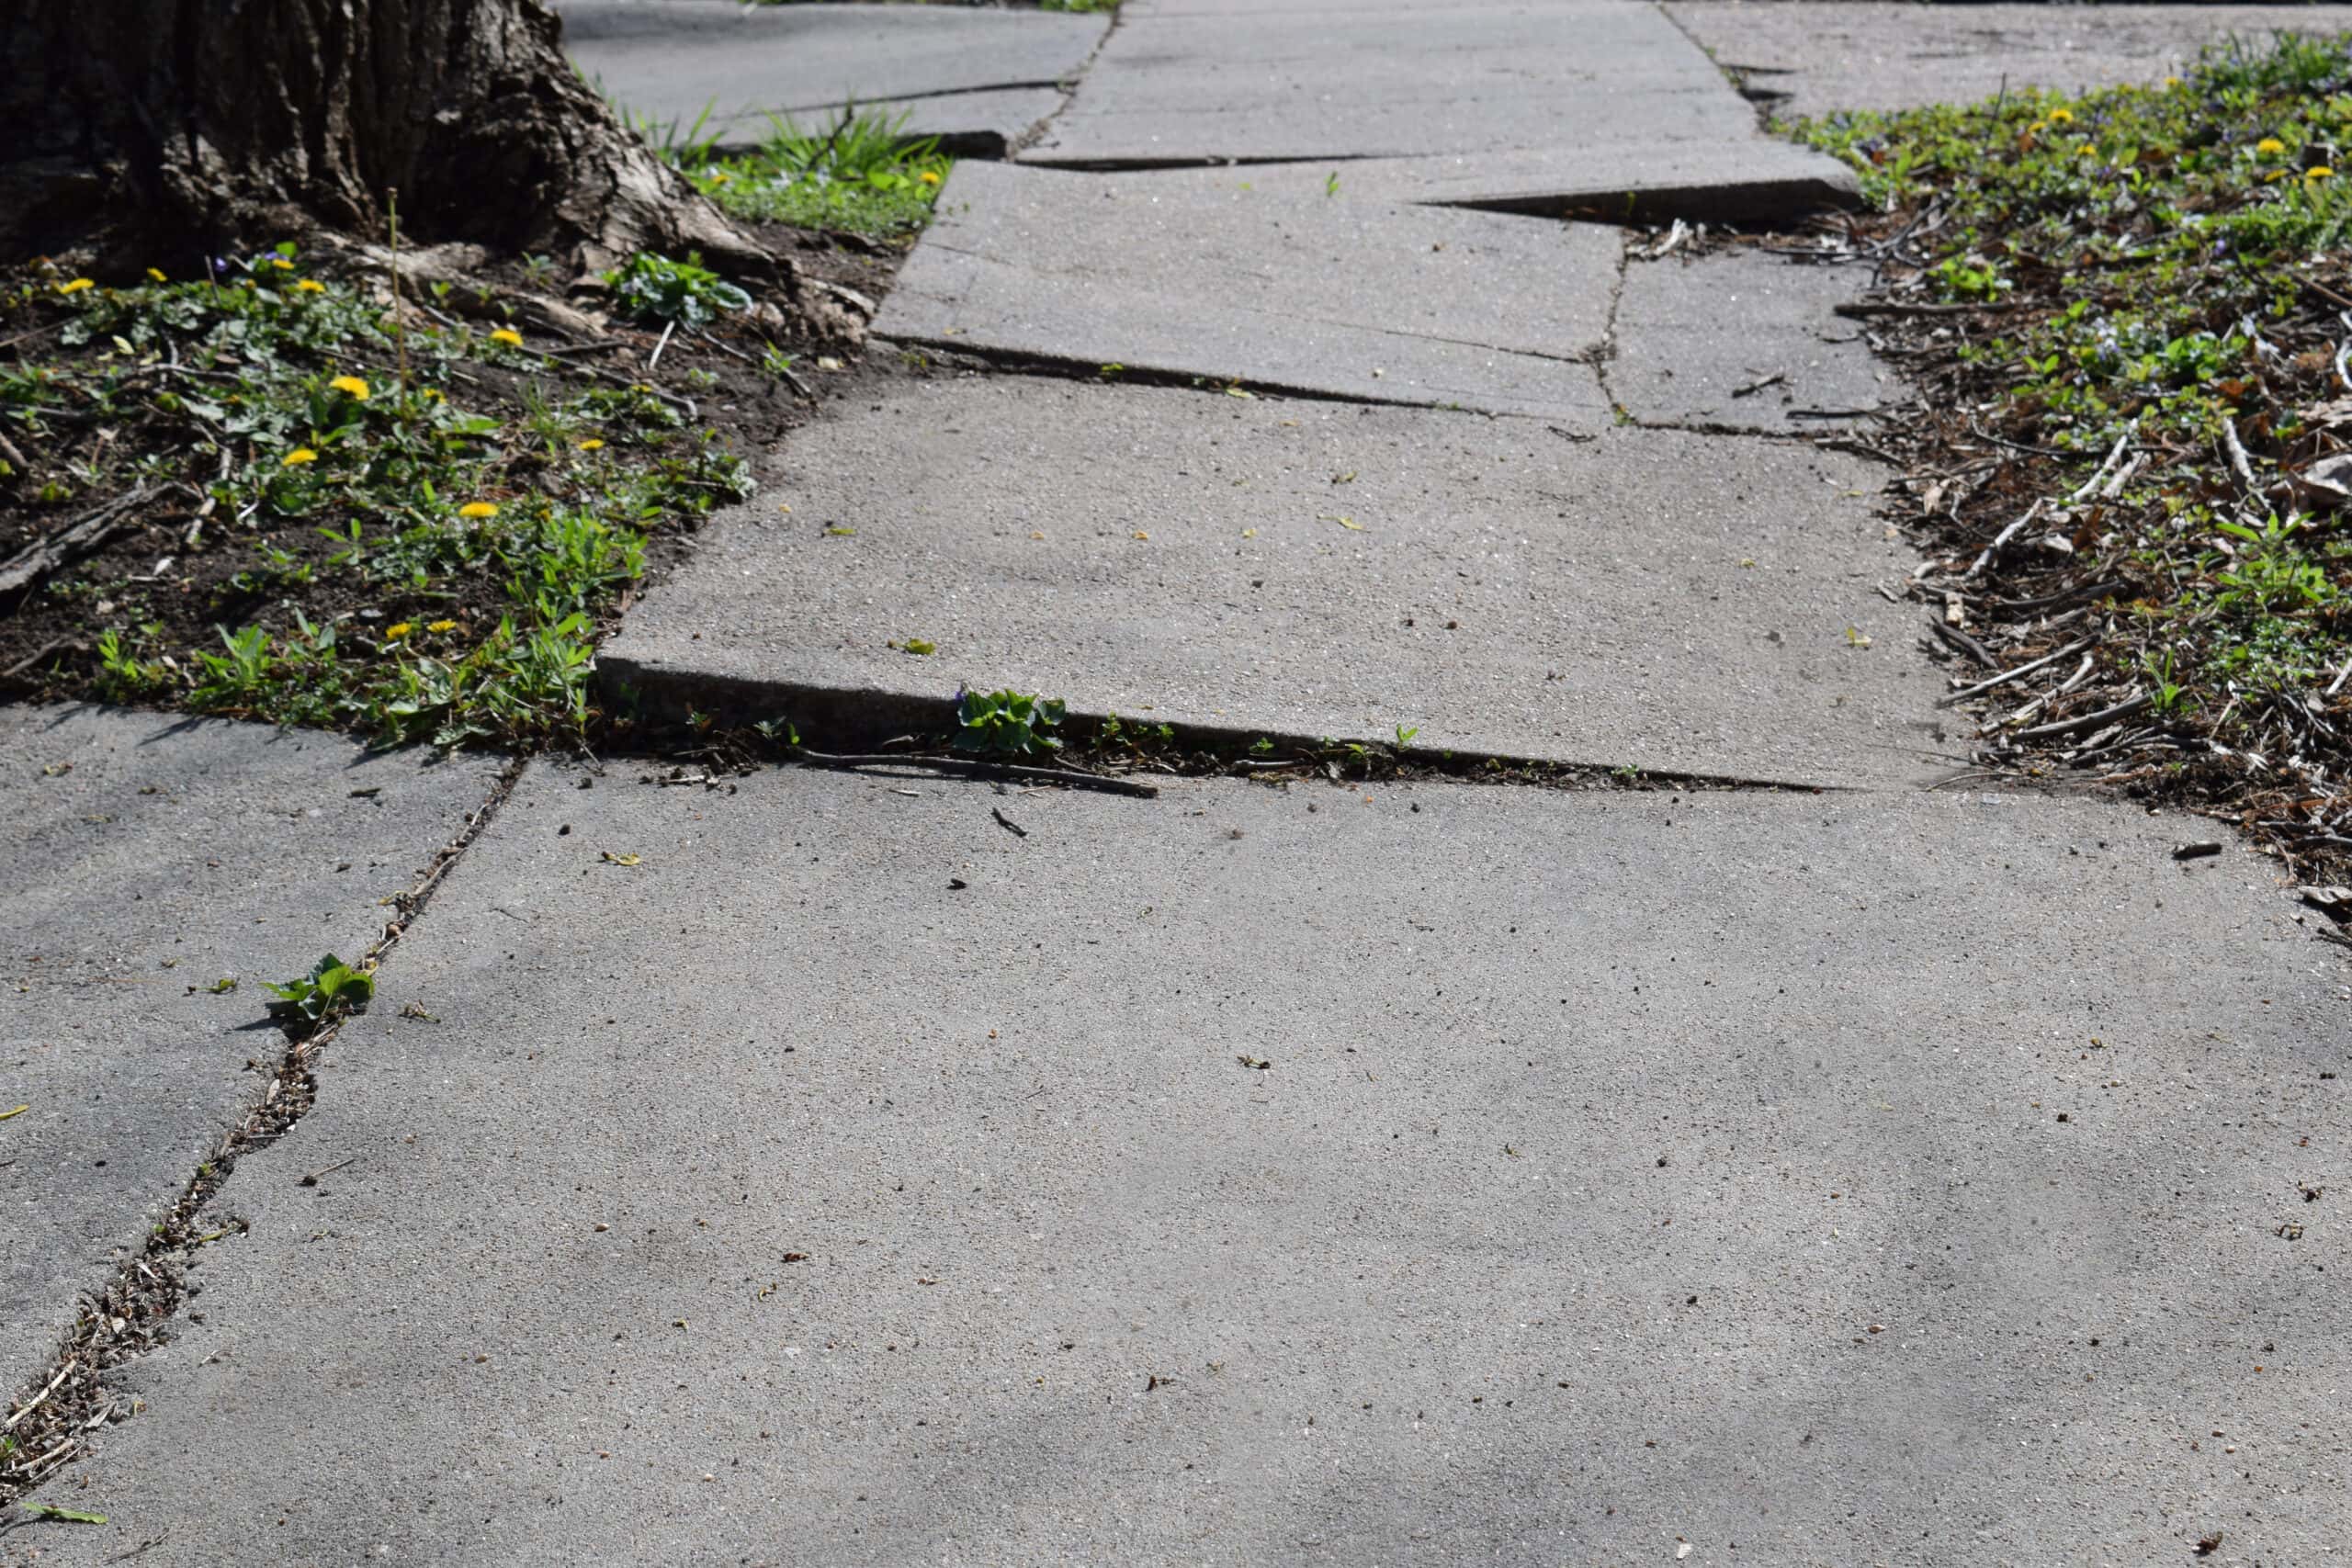 Uneven cracked broken public sidewalk making it dangerous to walk